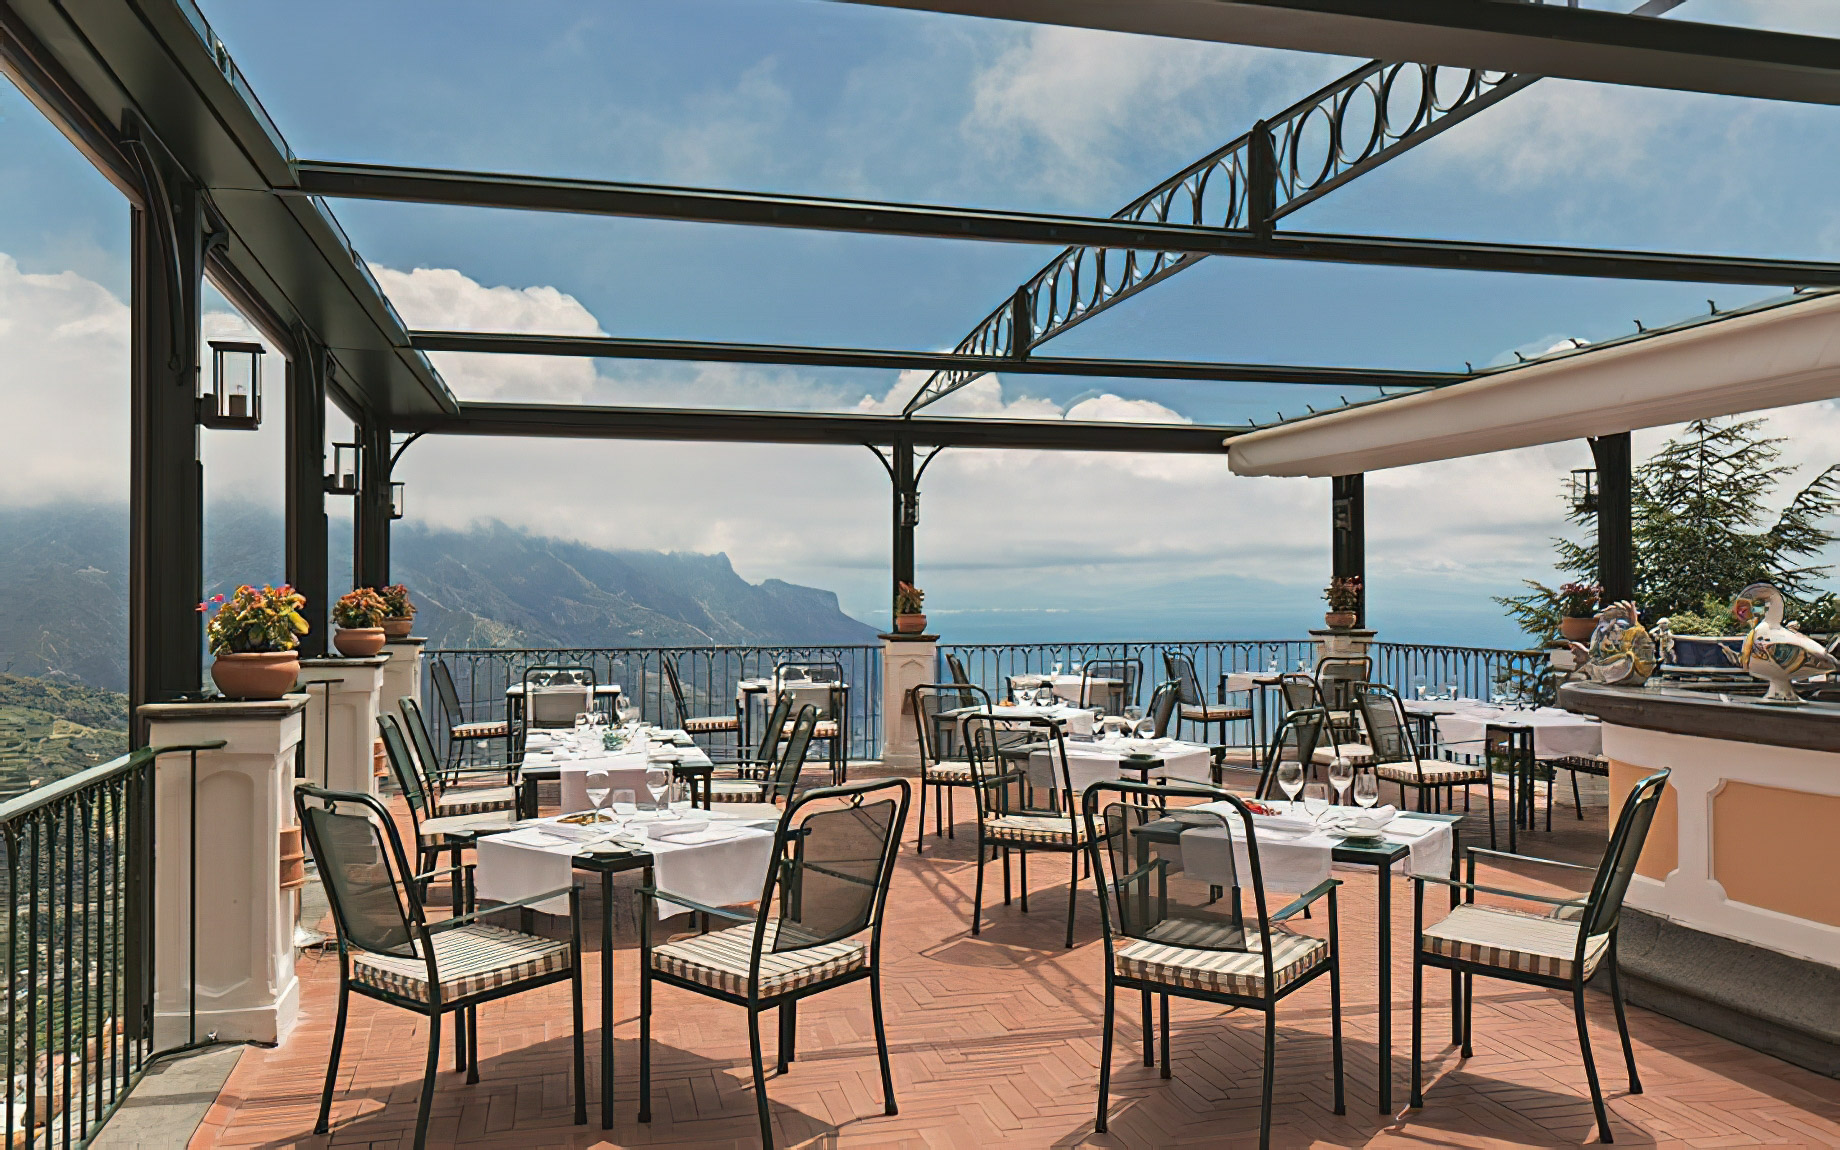 Palazzo Avino Hotel – Amalfi Coast, Ravello, Italy – Terrazza Belvedere Restaurant